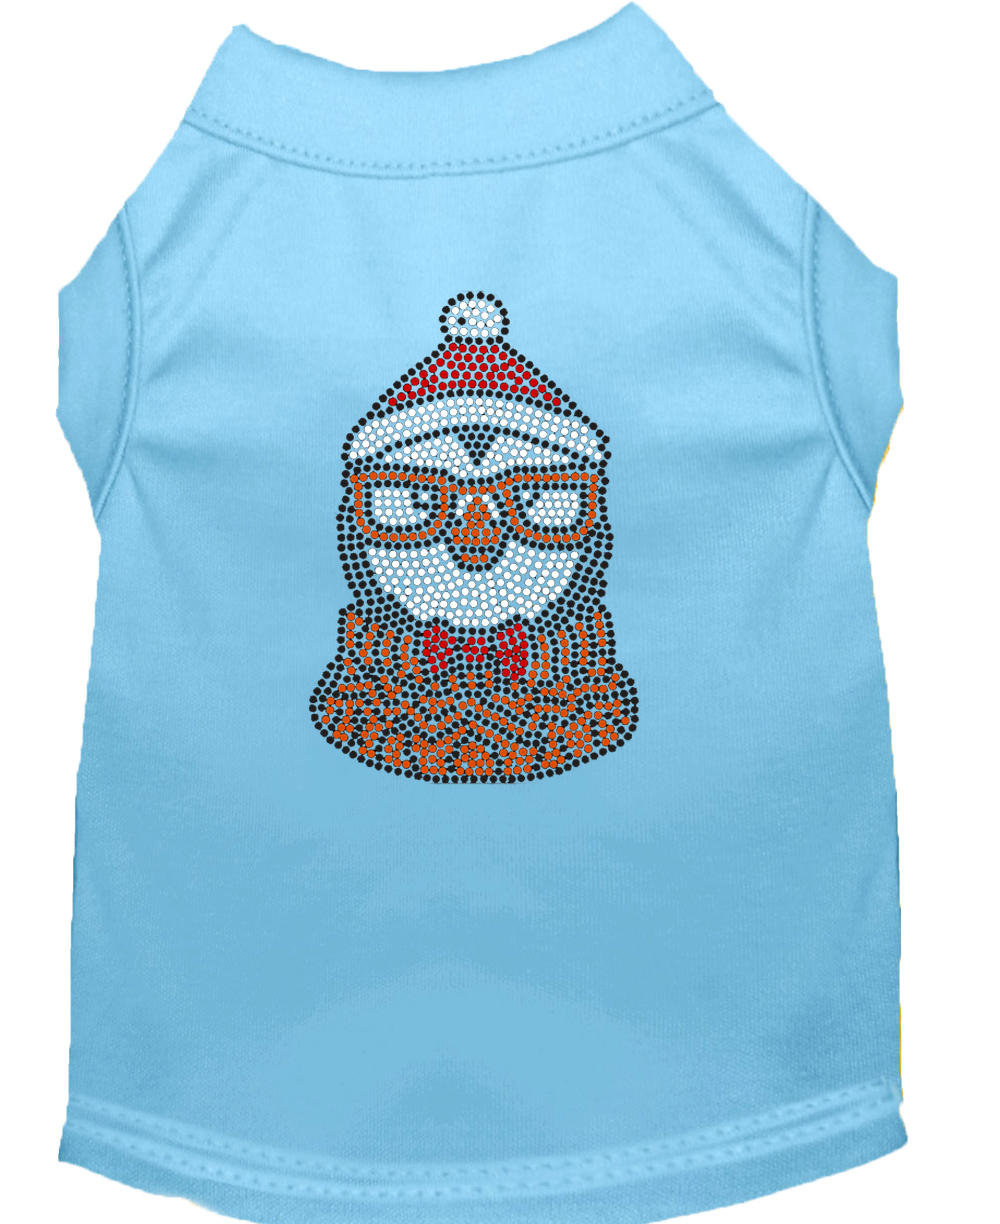 Hipster Penguin Rhinestone Dog Shirt Baby Blue Med